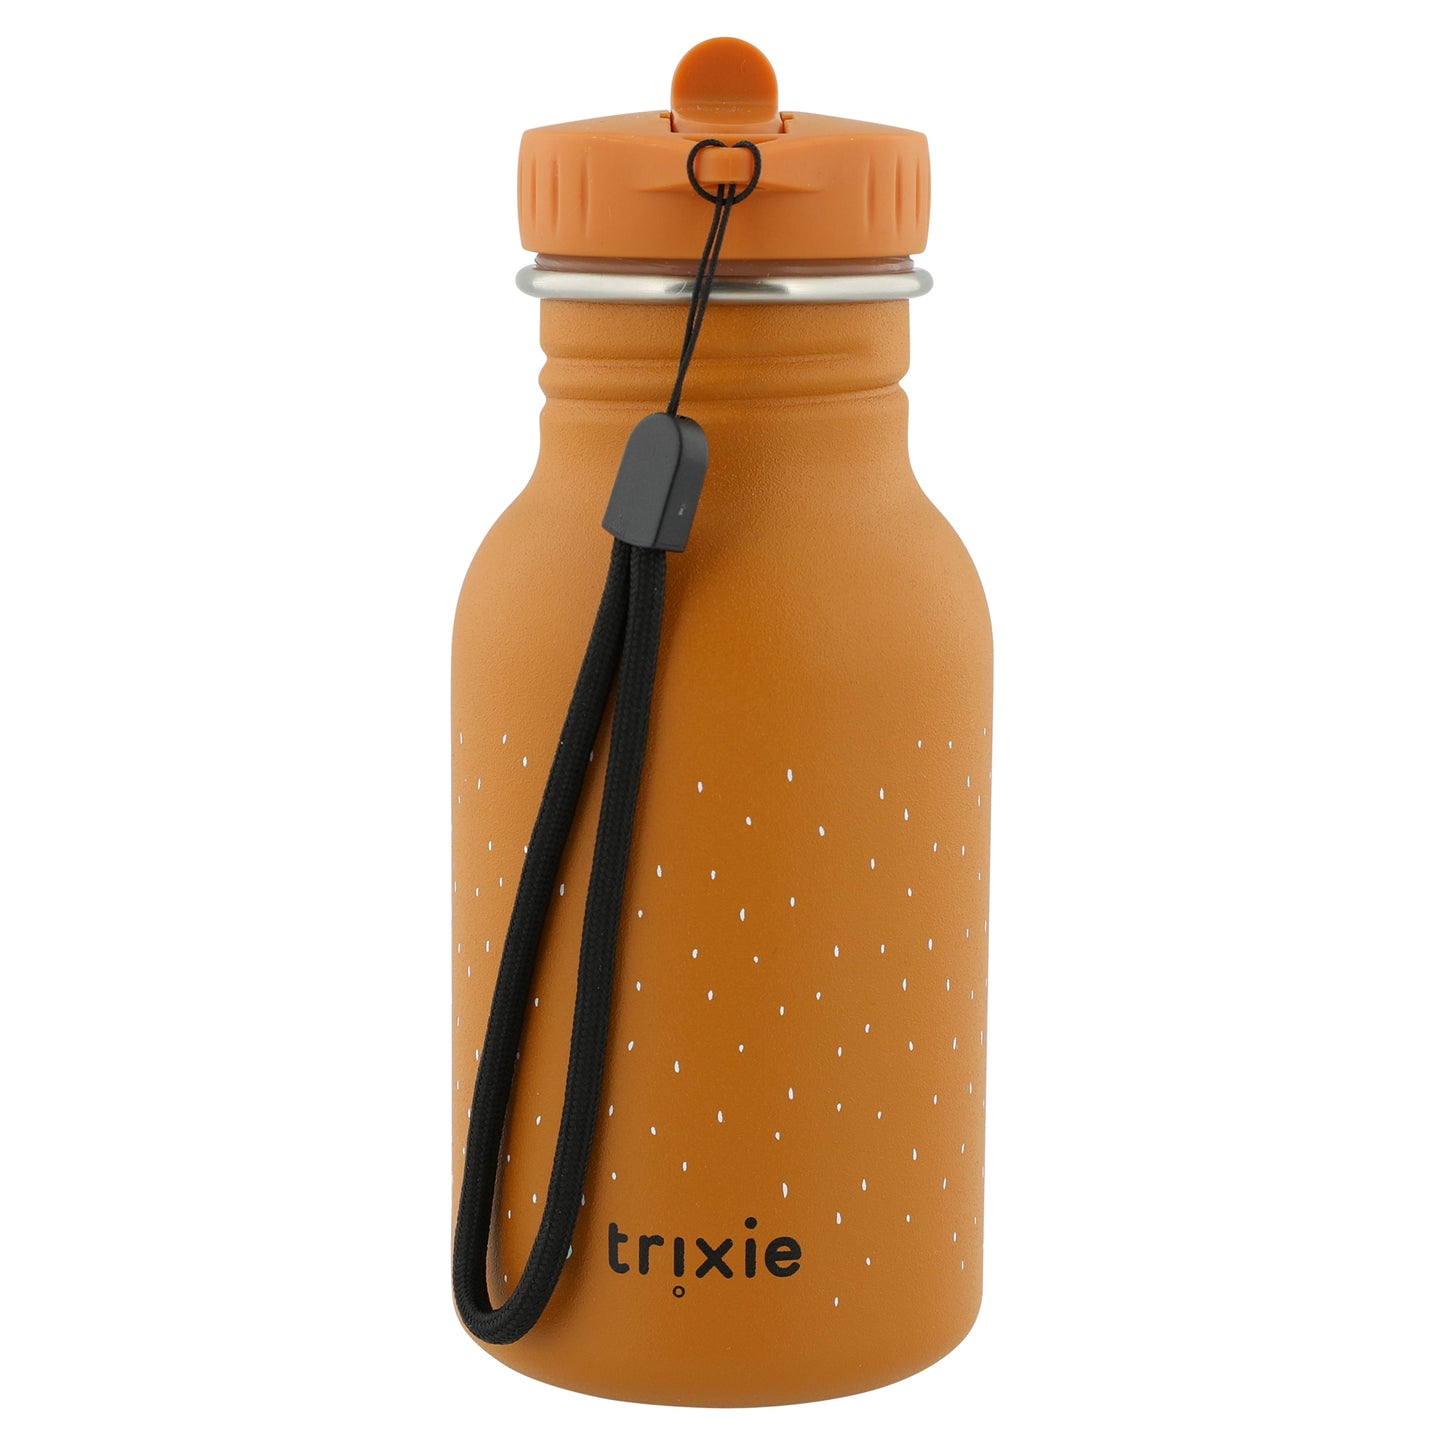 Mr Fox Water Bottle - 350 ml - Trixie